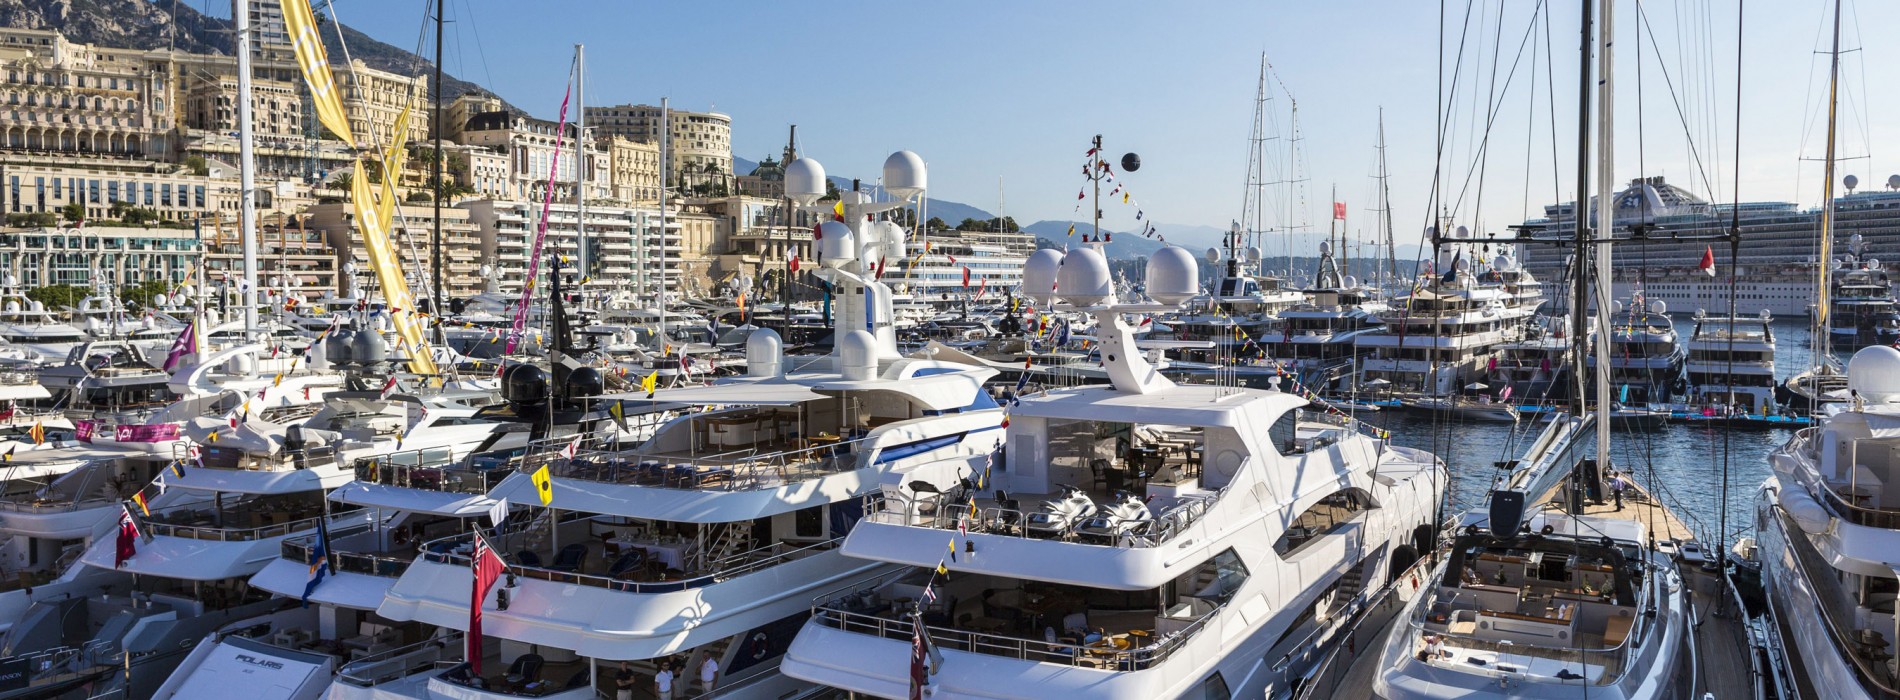 Monaco Yacht Show 23 – 26 September 2015